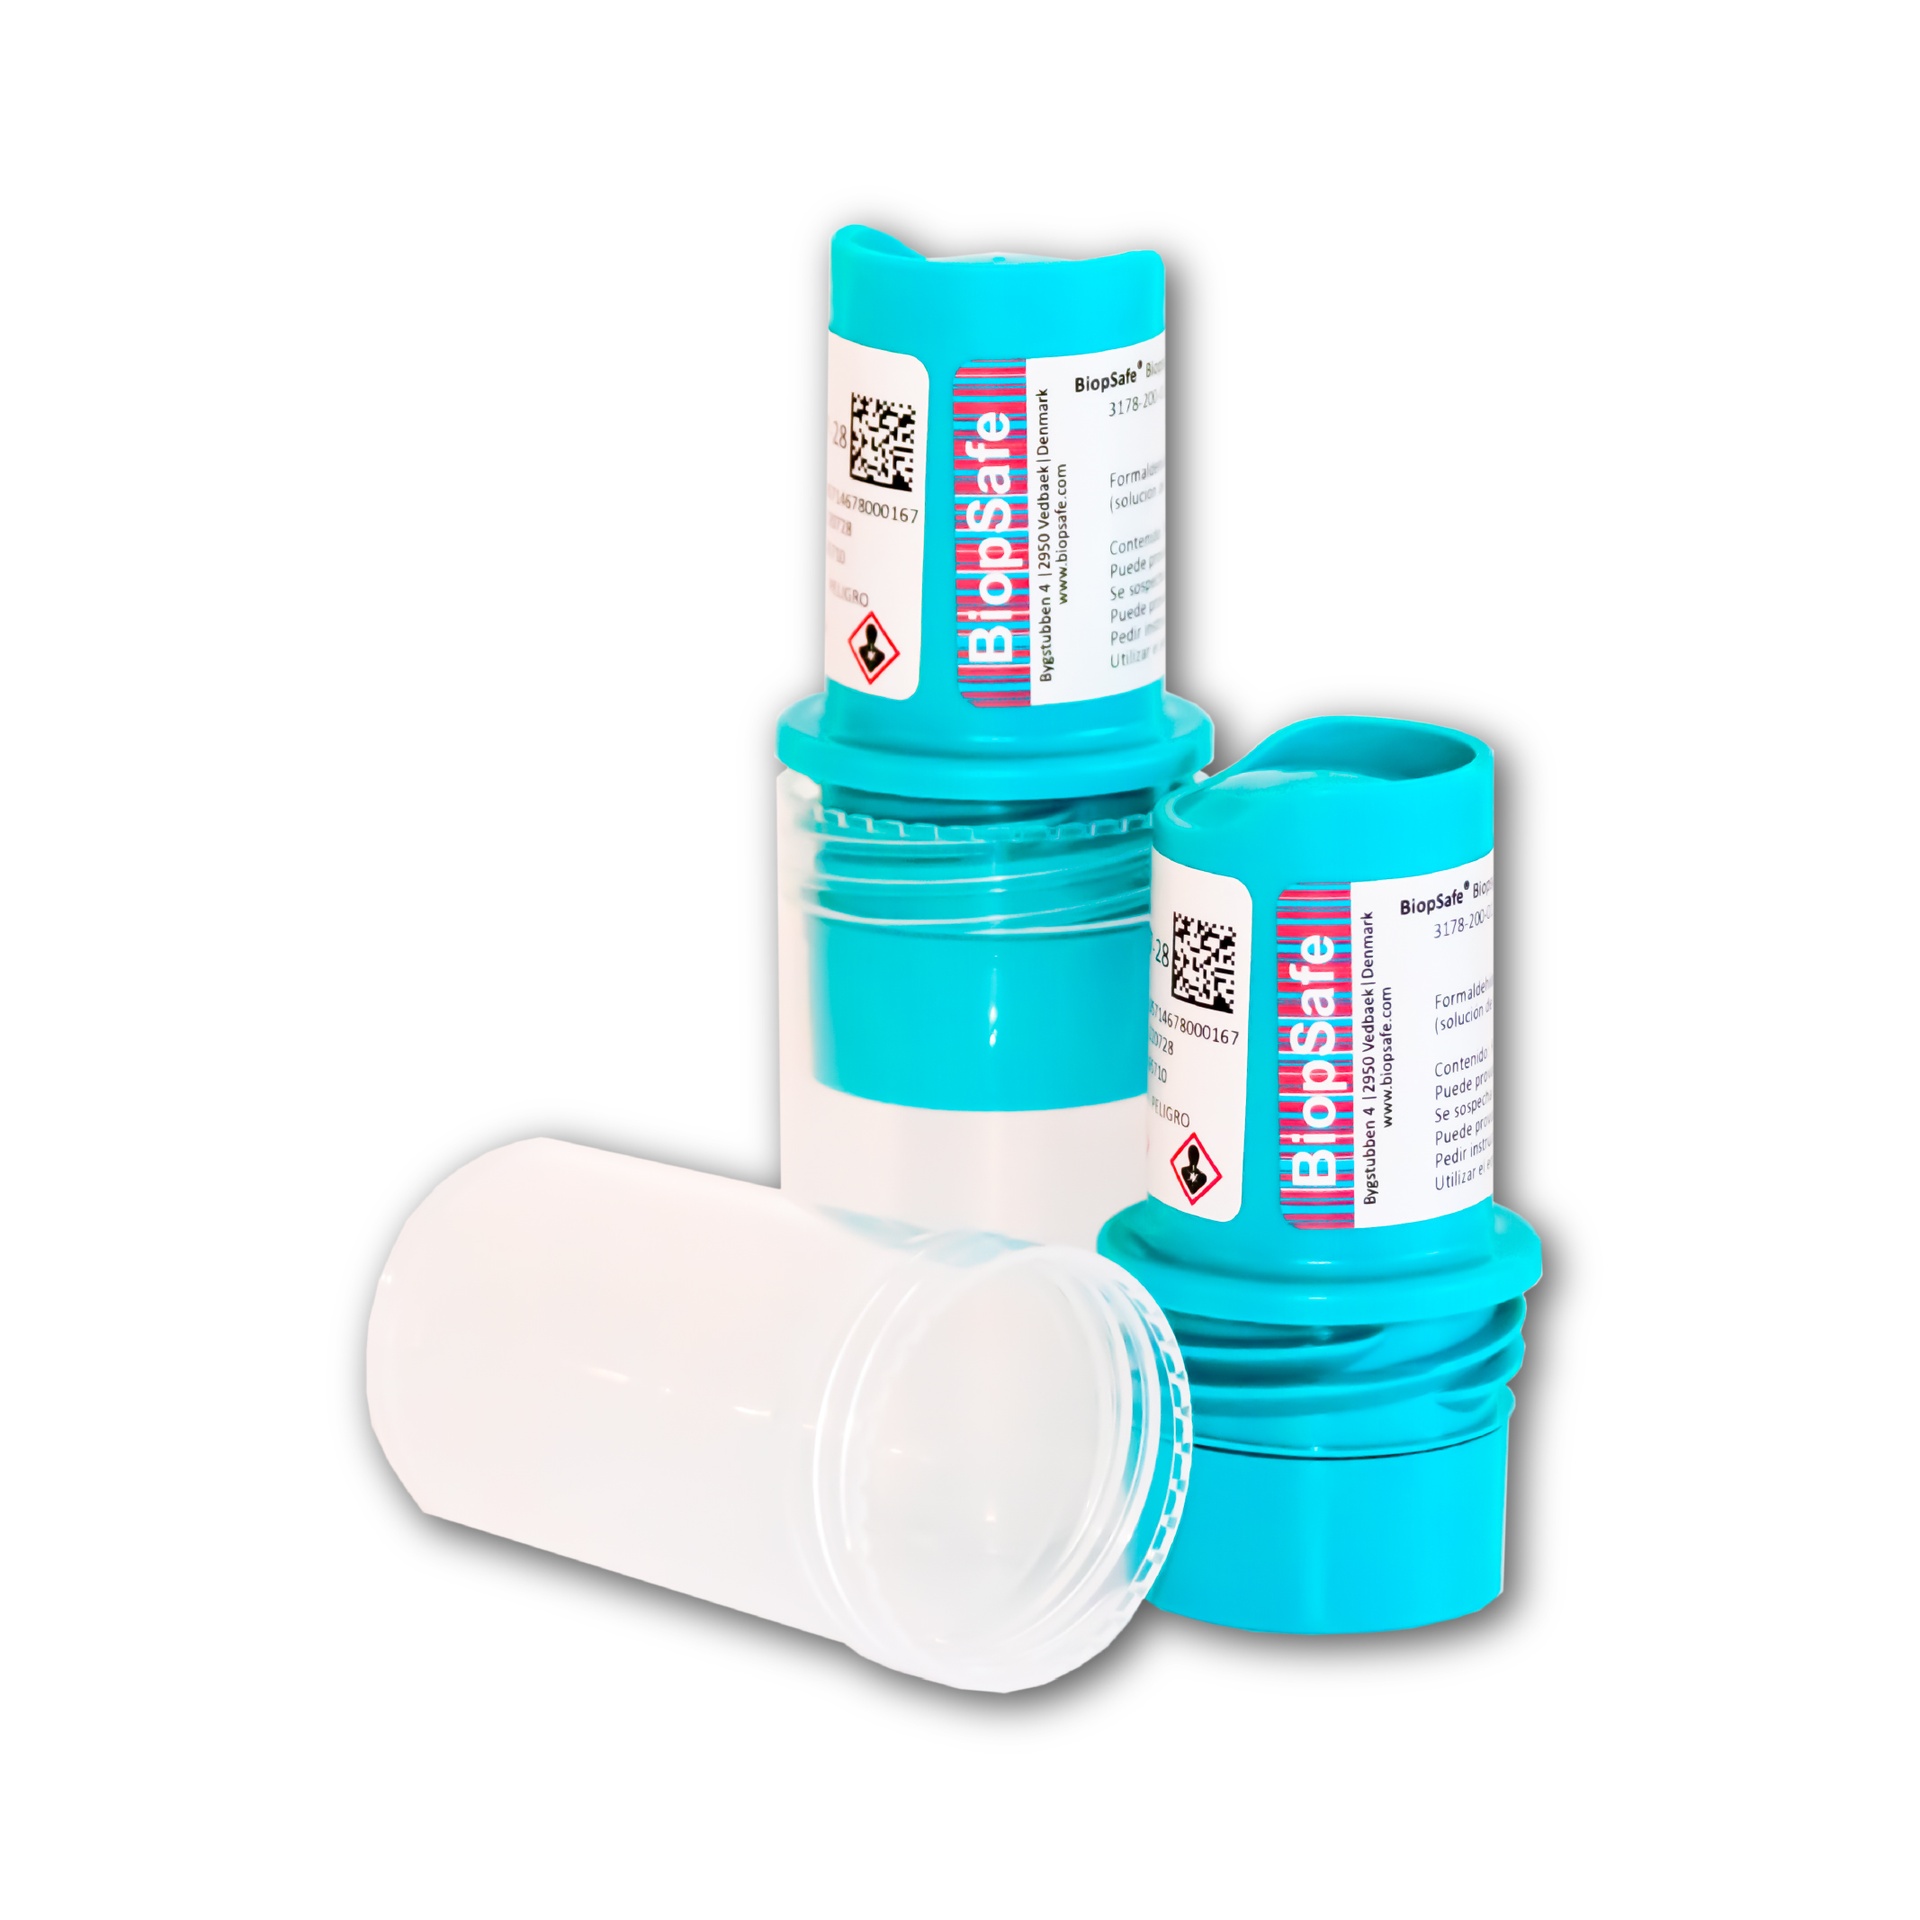 [3178-200-00] BiopSafe contenedor para biopsias de 20 ml.